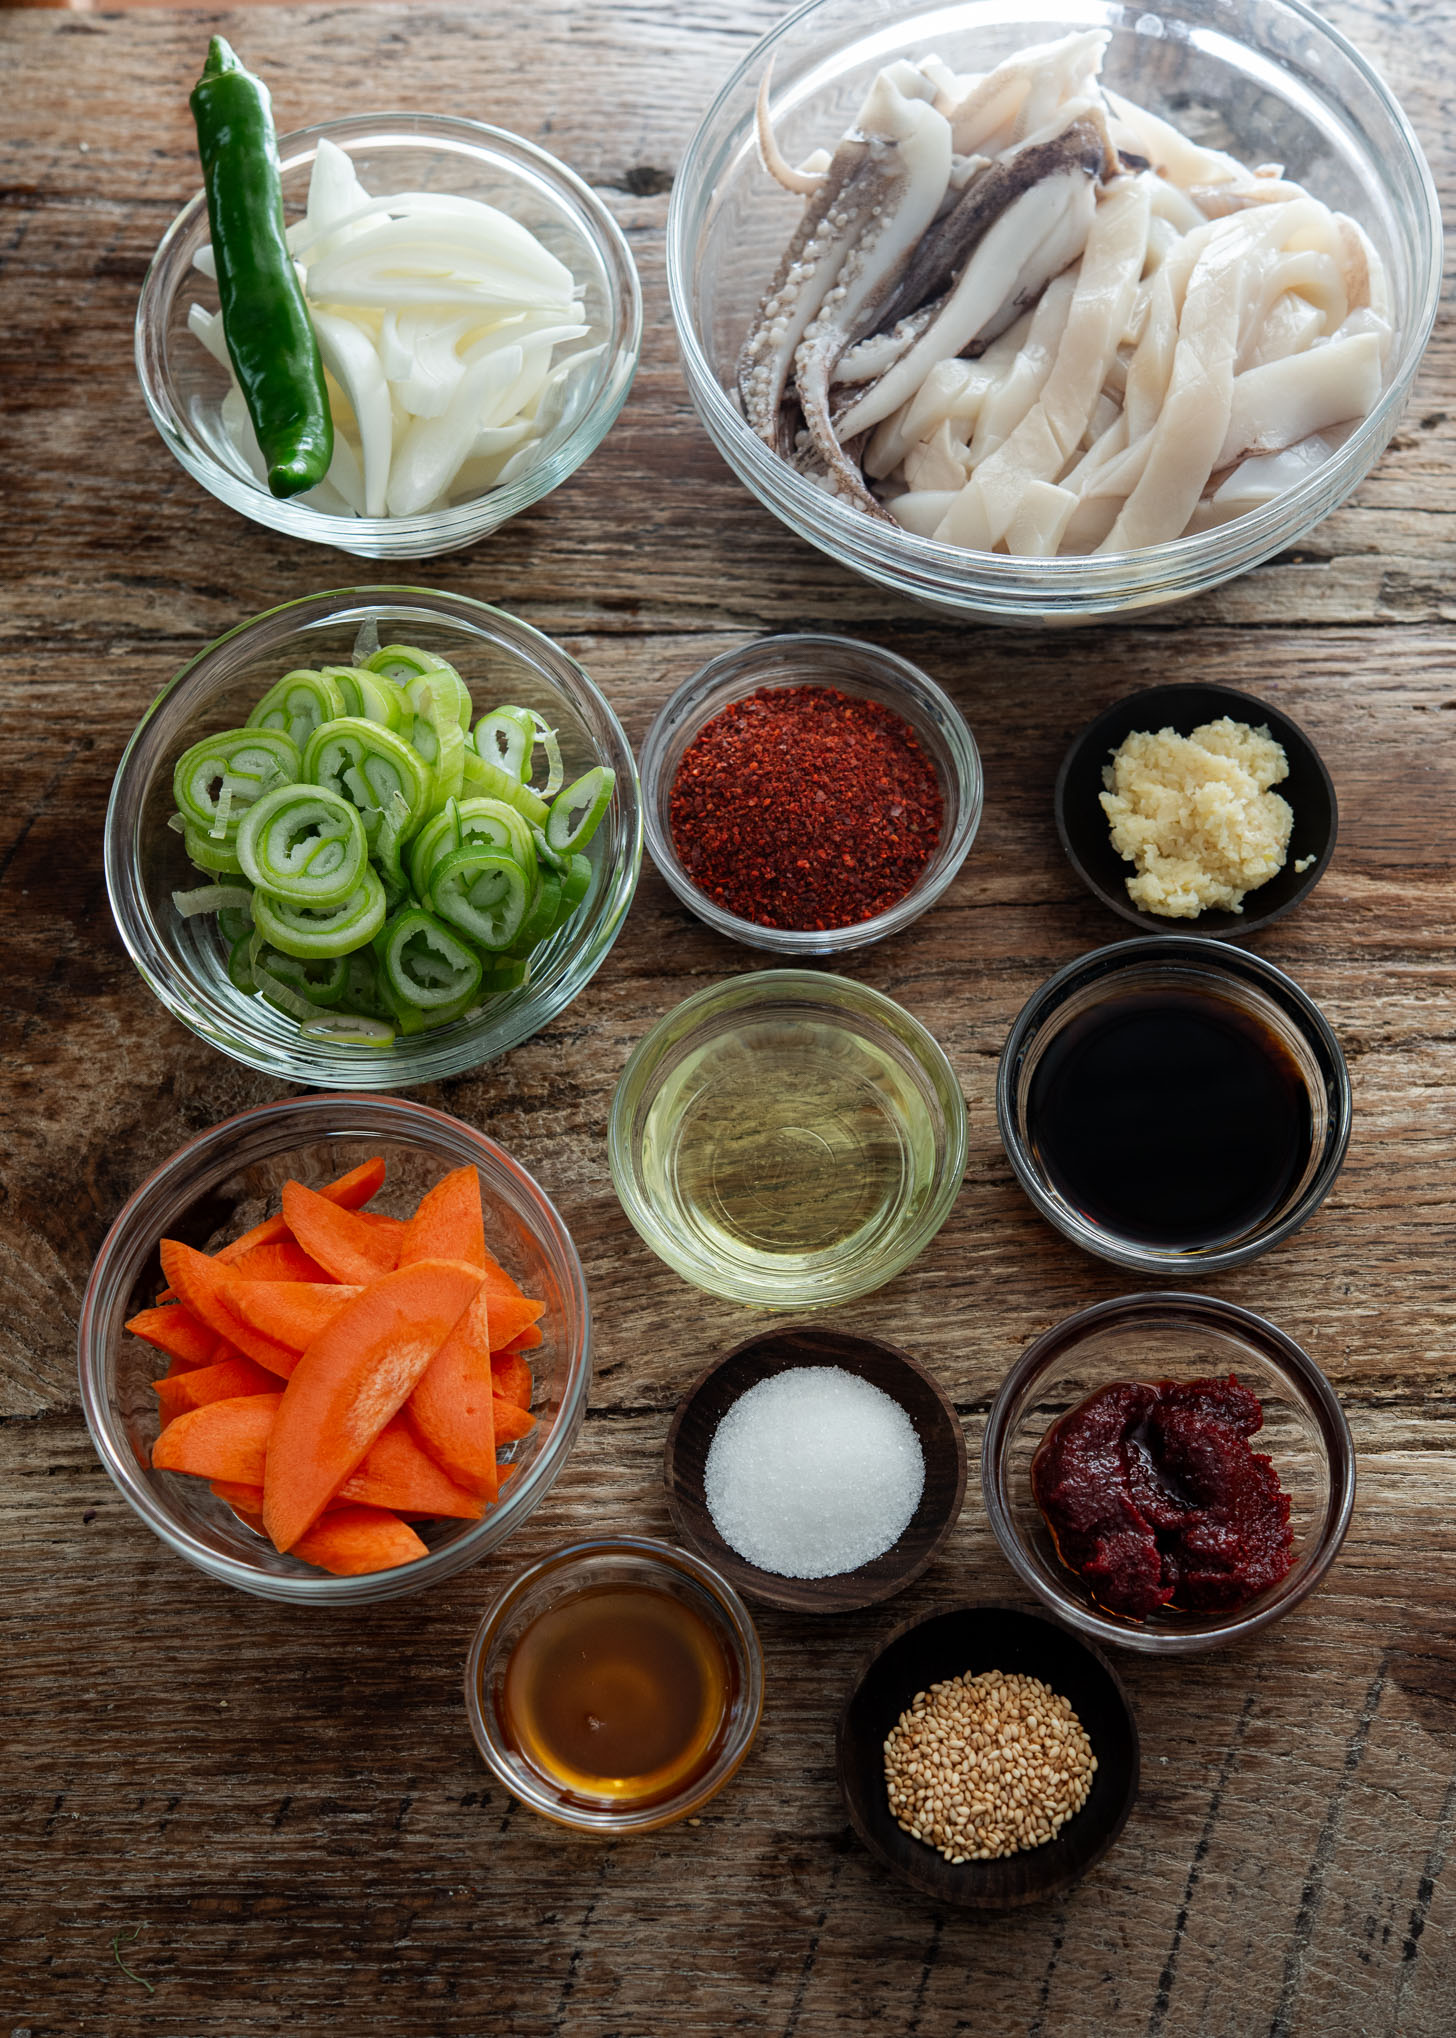 Ingredients for making Korean squid stir-fry recipe.